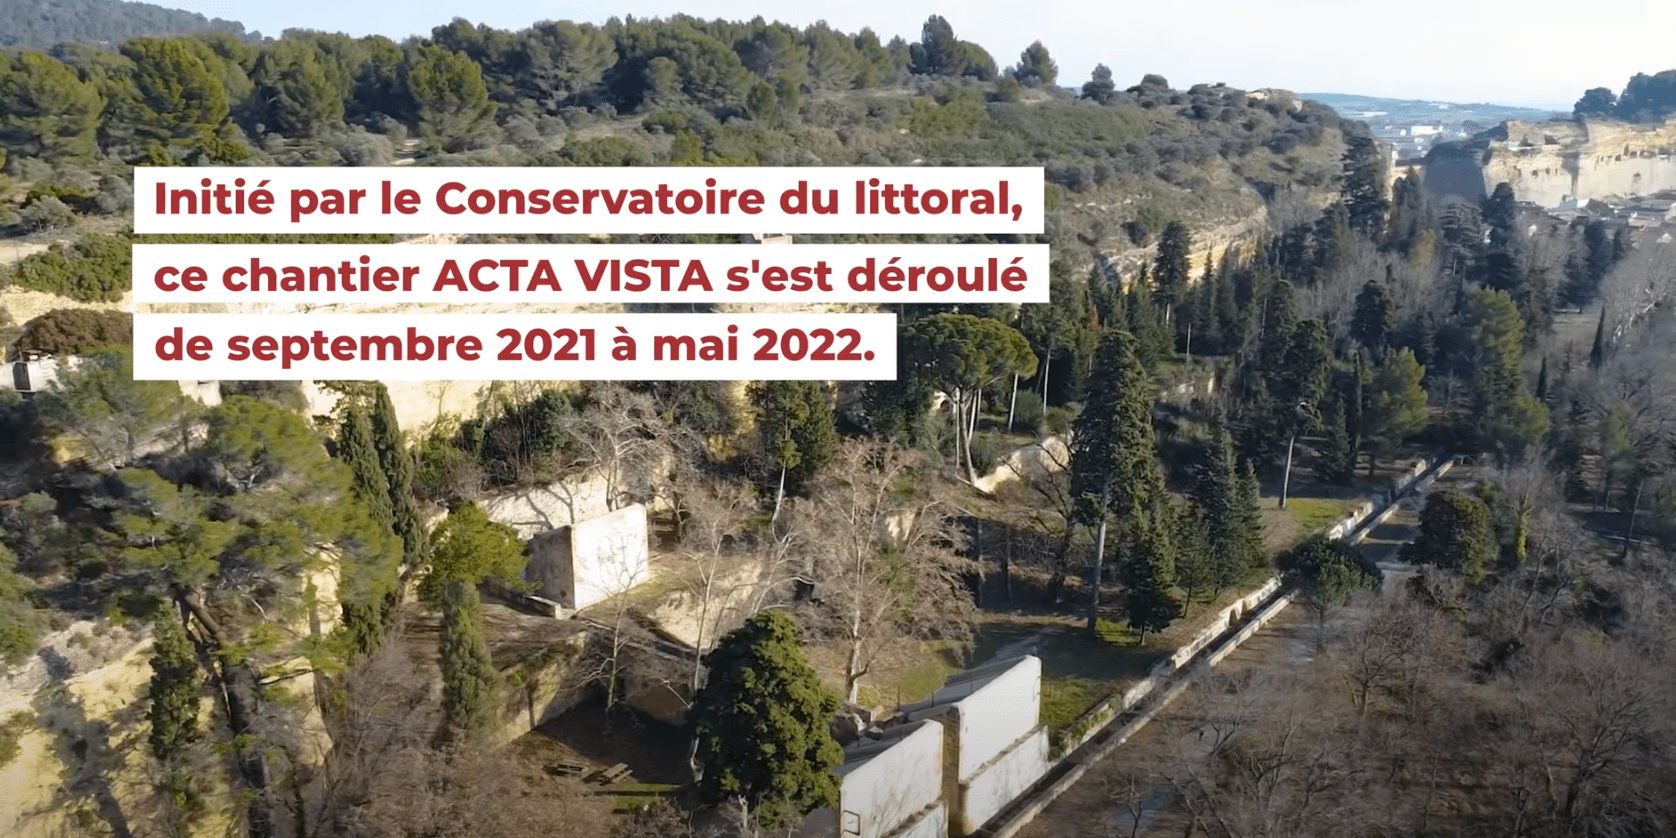 ACTA VISTA |  Our action at the Poudrerie de Saint-Chamas / Miramas